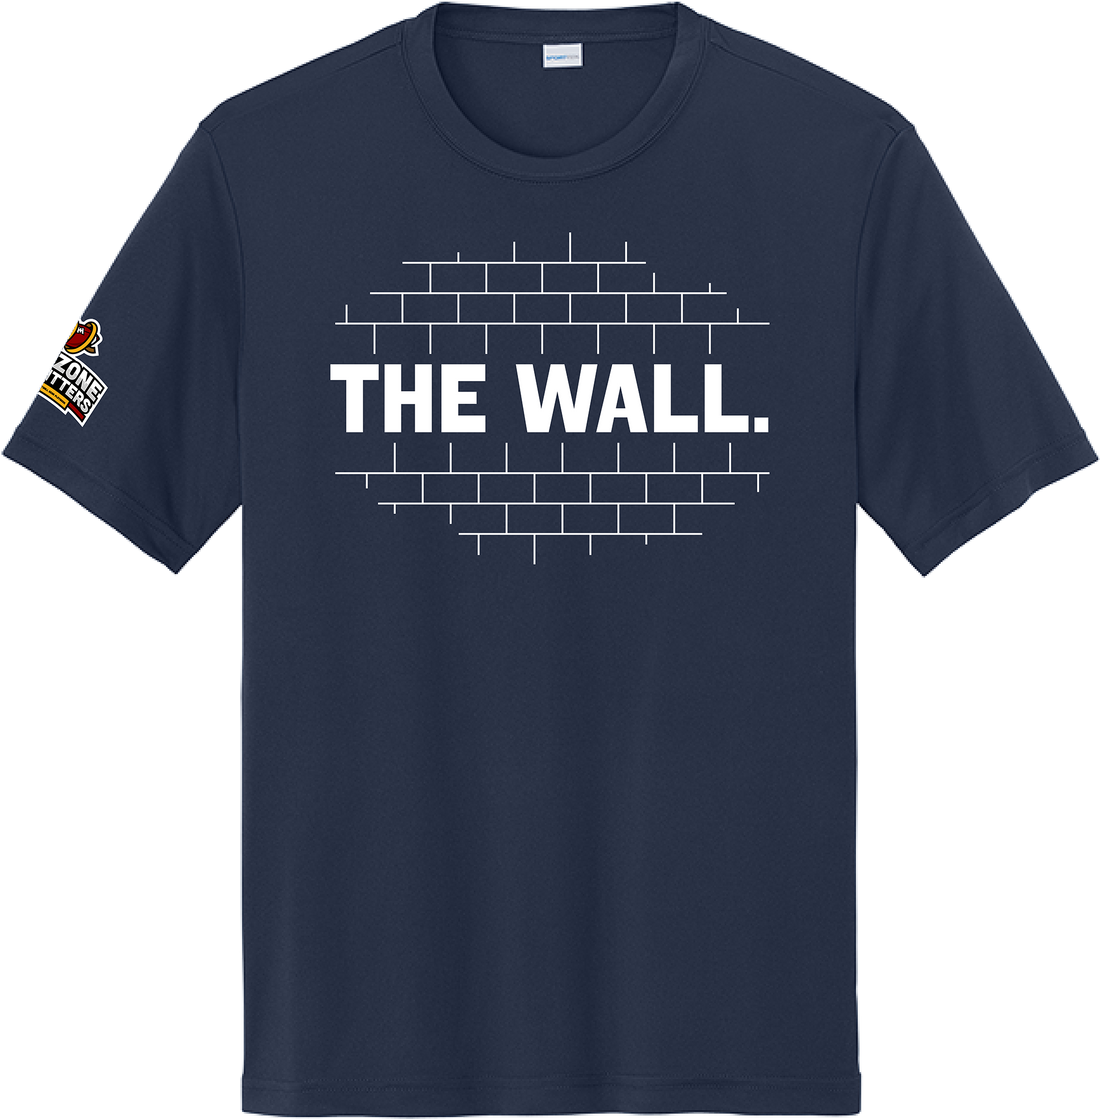 The Brick Wall - Short Sleeve Shirt